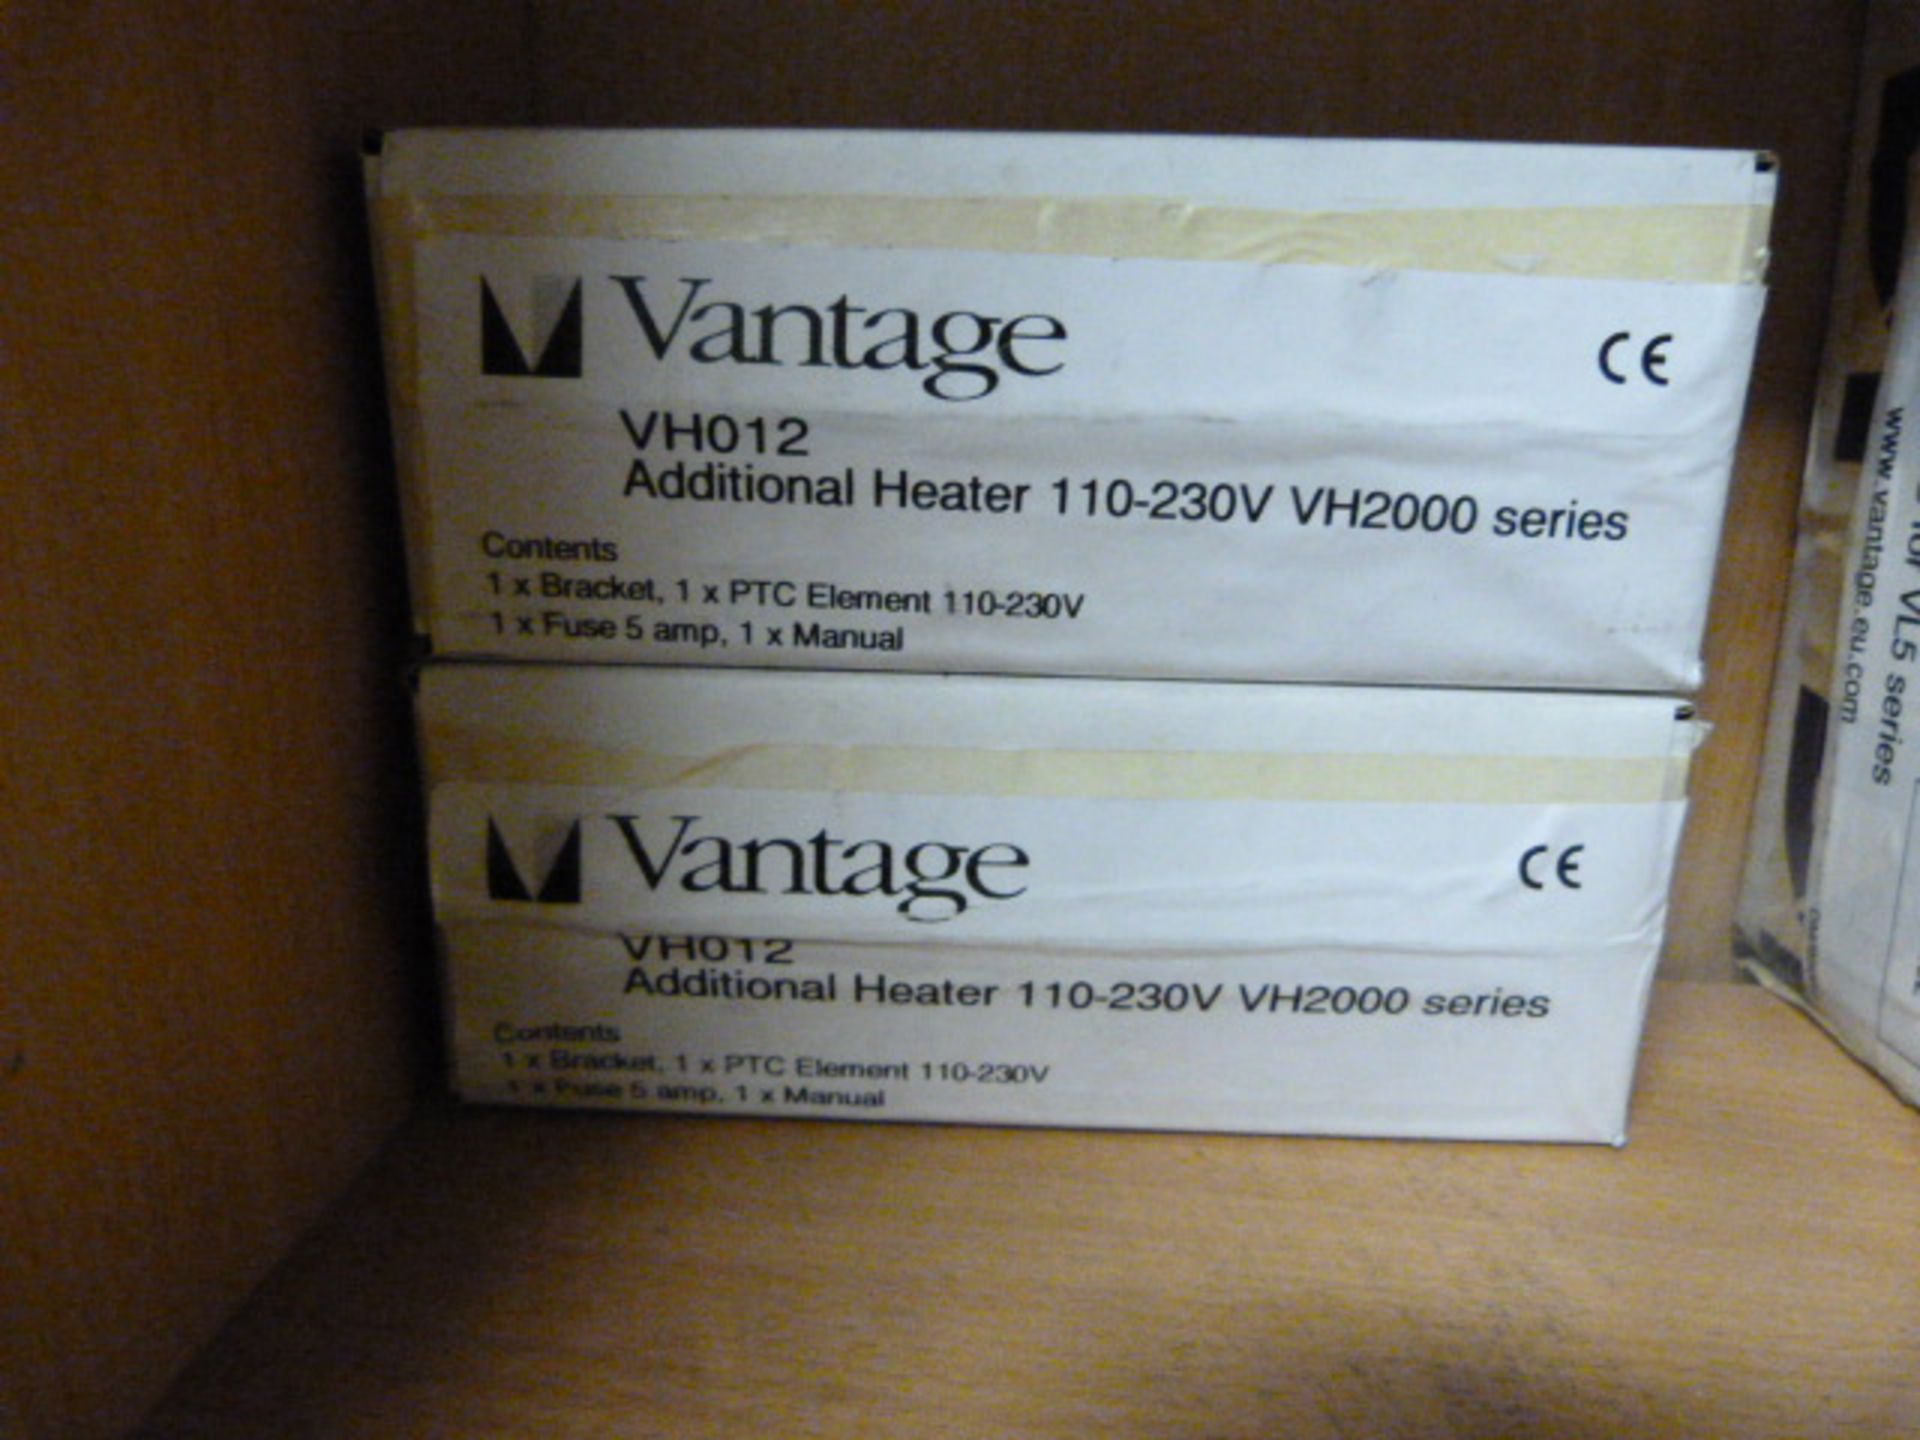 *Two Vantage VHO12 Additional Heater 110-230V VH20